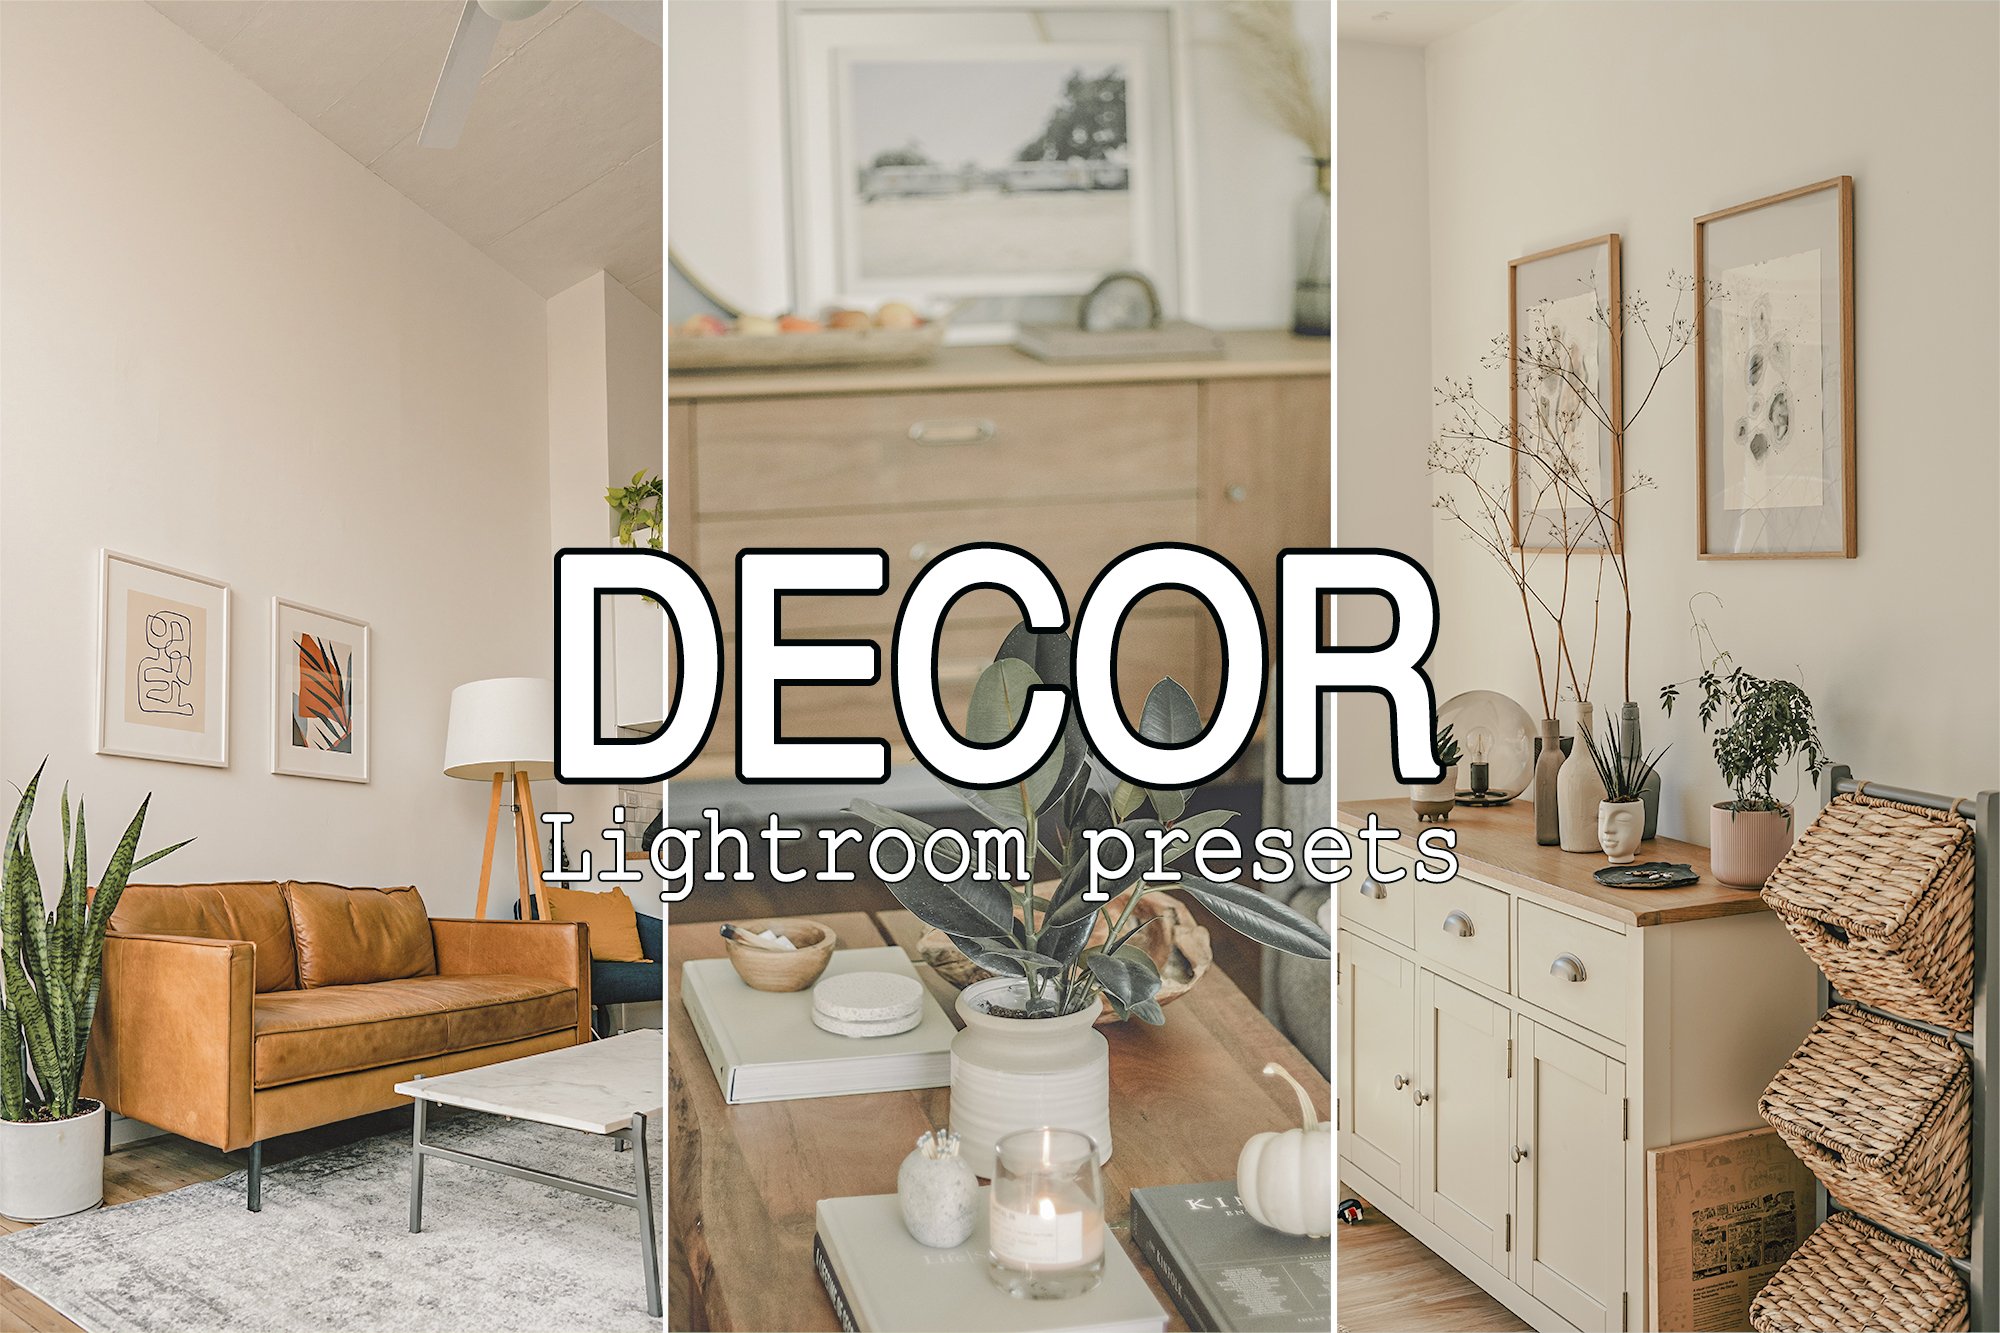 11 Decor Lightroom presets for Homecover image.